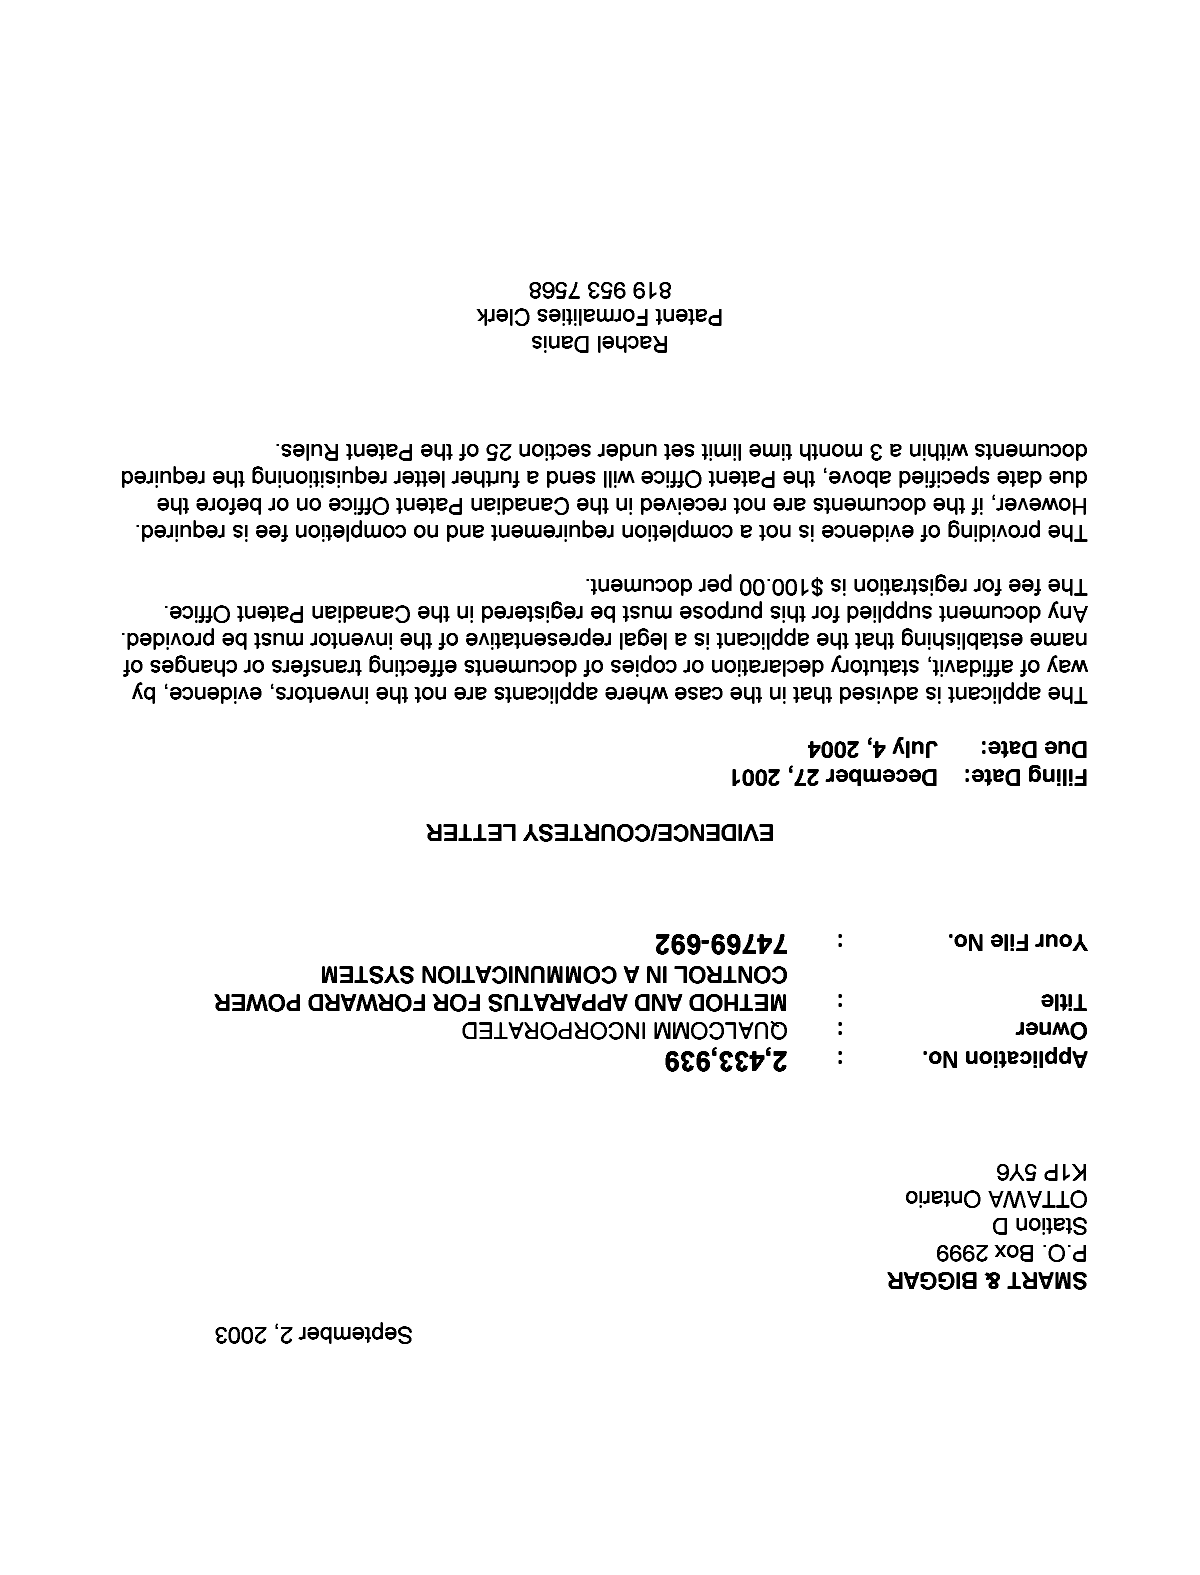 Canadian Patent Document 2433939. Correspondence 20021228. Image 1 of 1